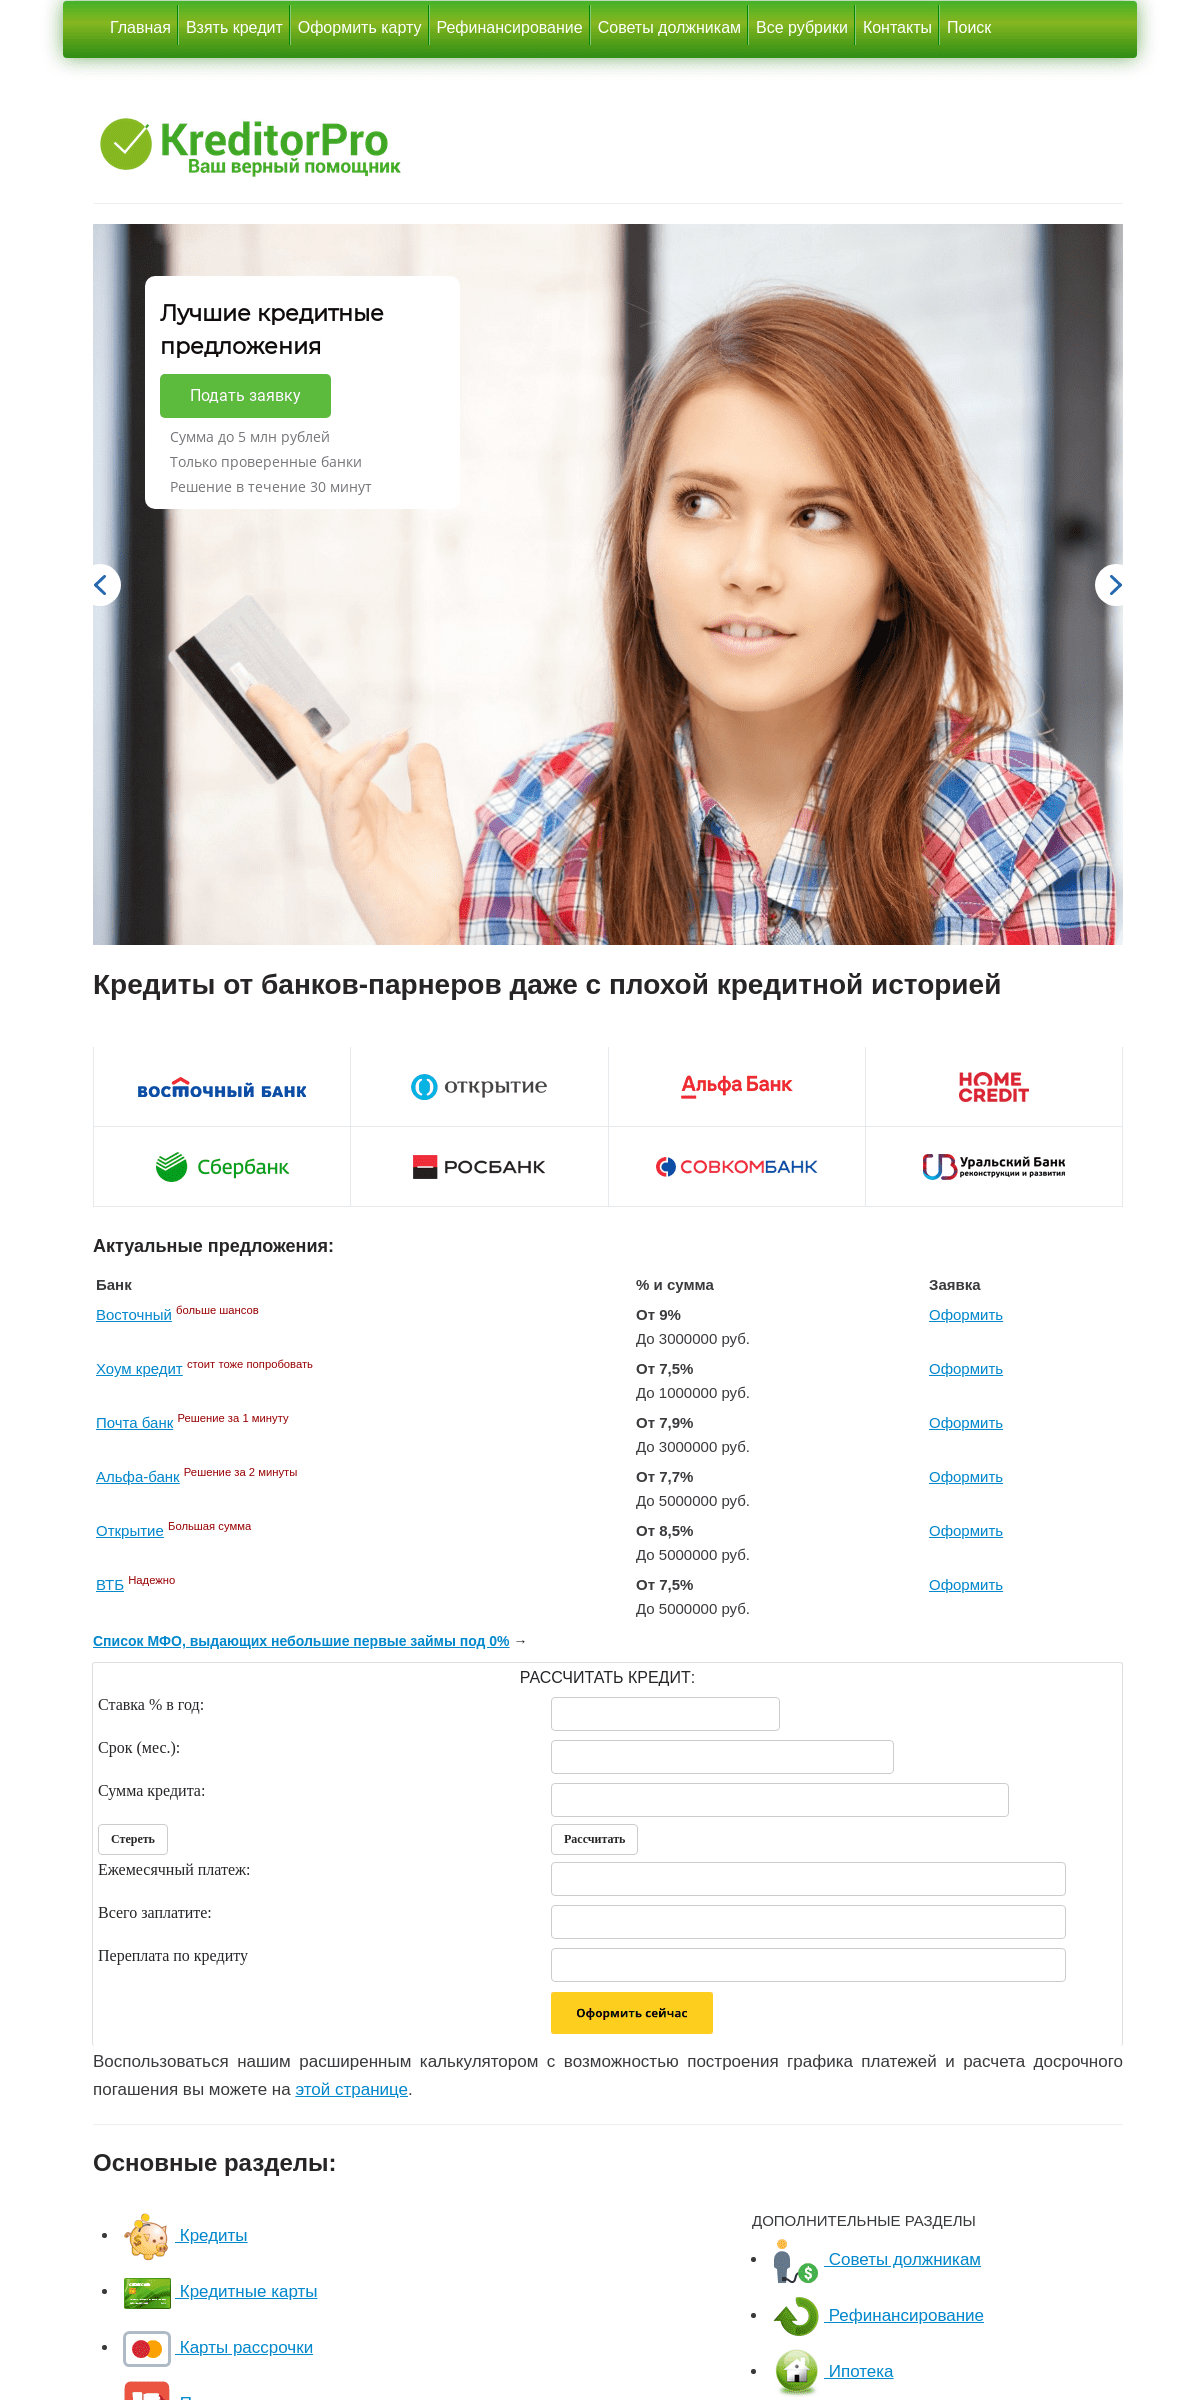 A complete backup of kreditorpro.ru